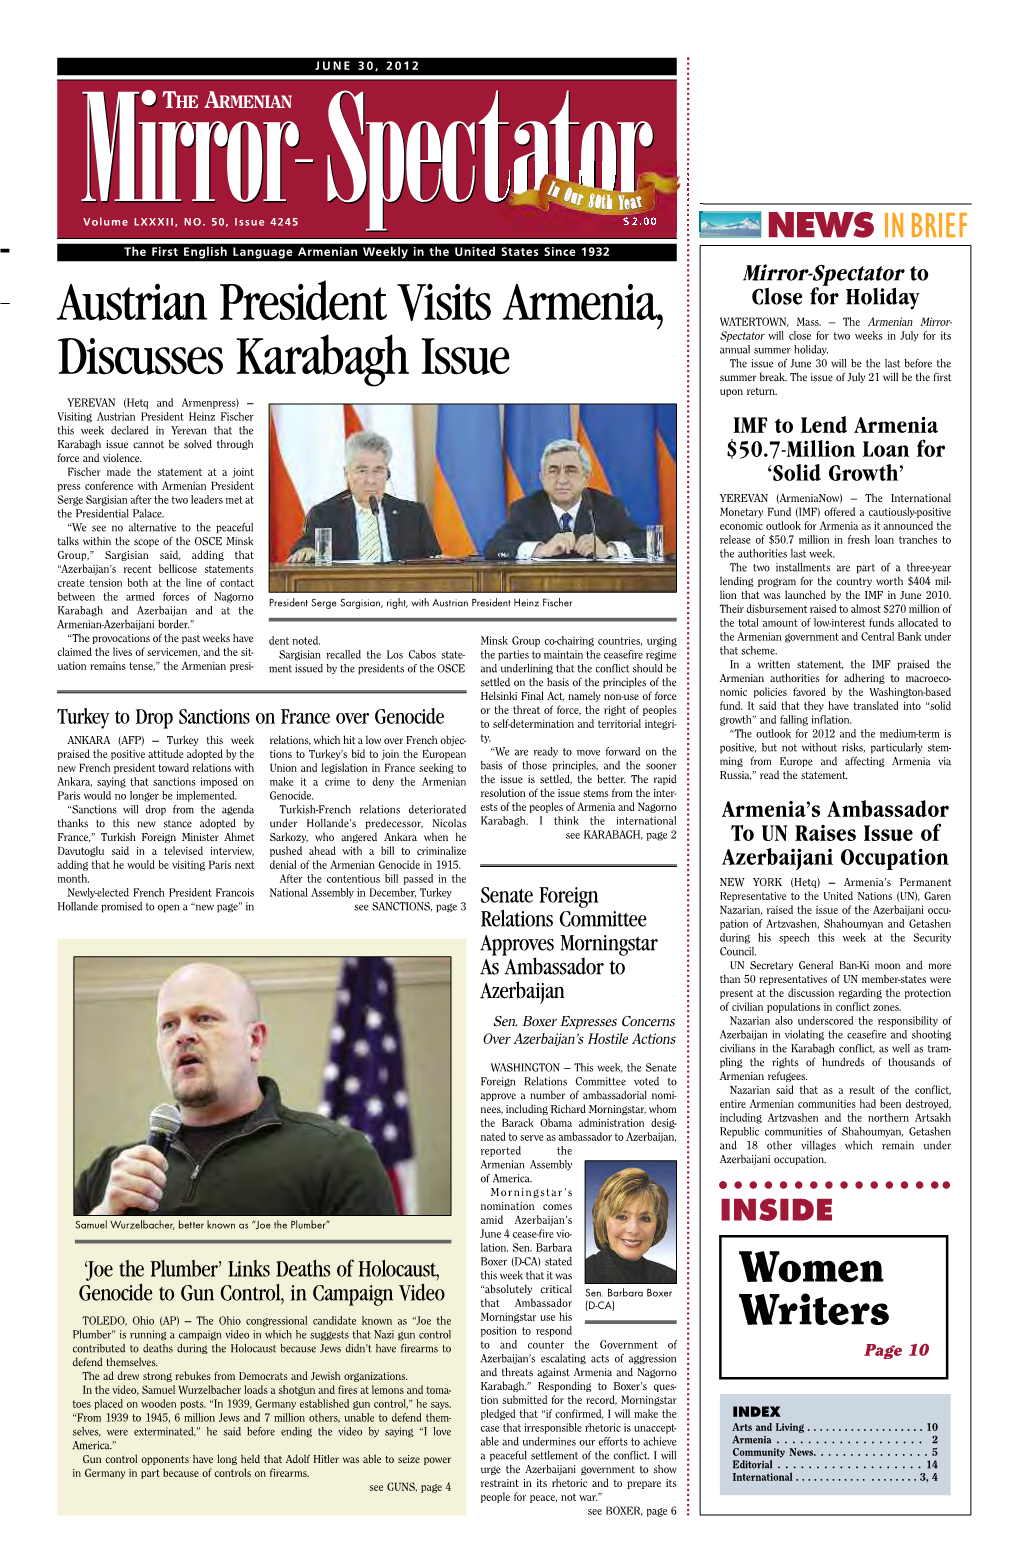 Austrian President Visits Armenia, Discusses Karabagh Issue